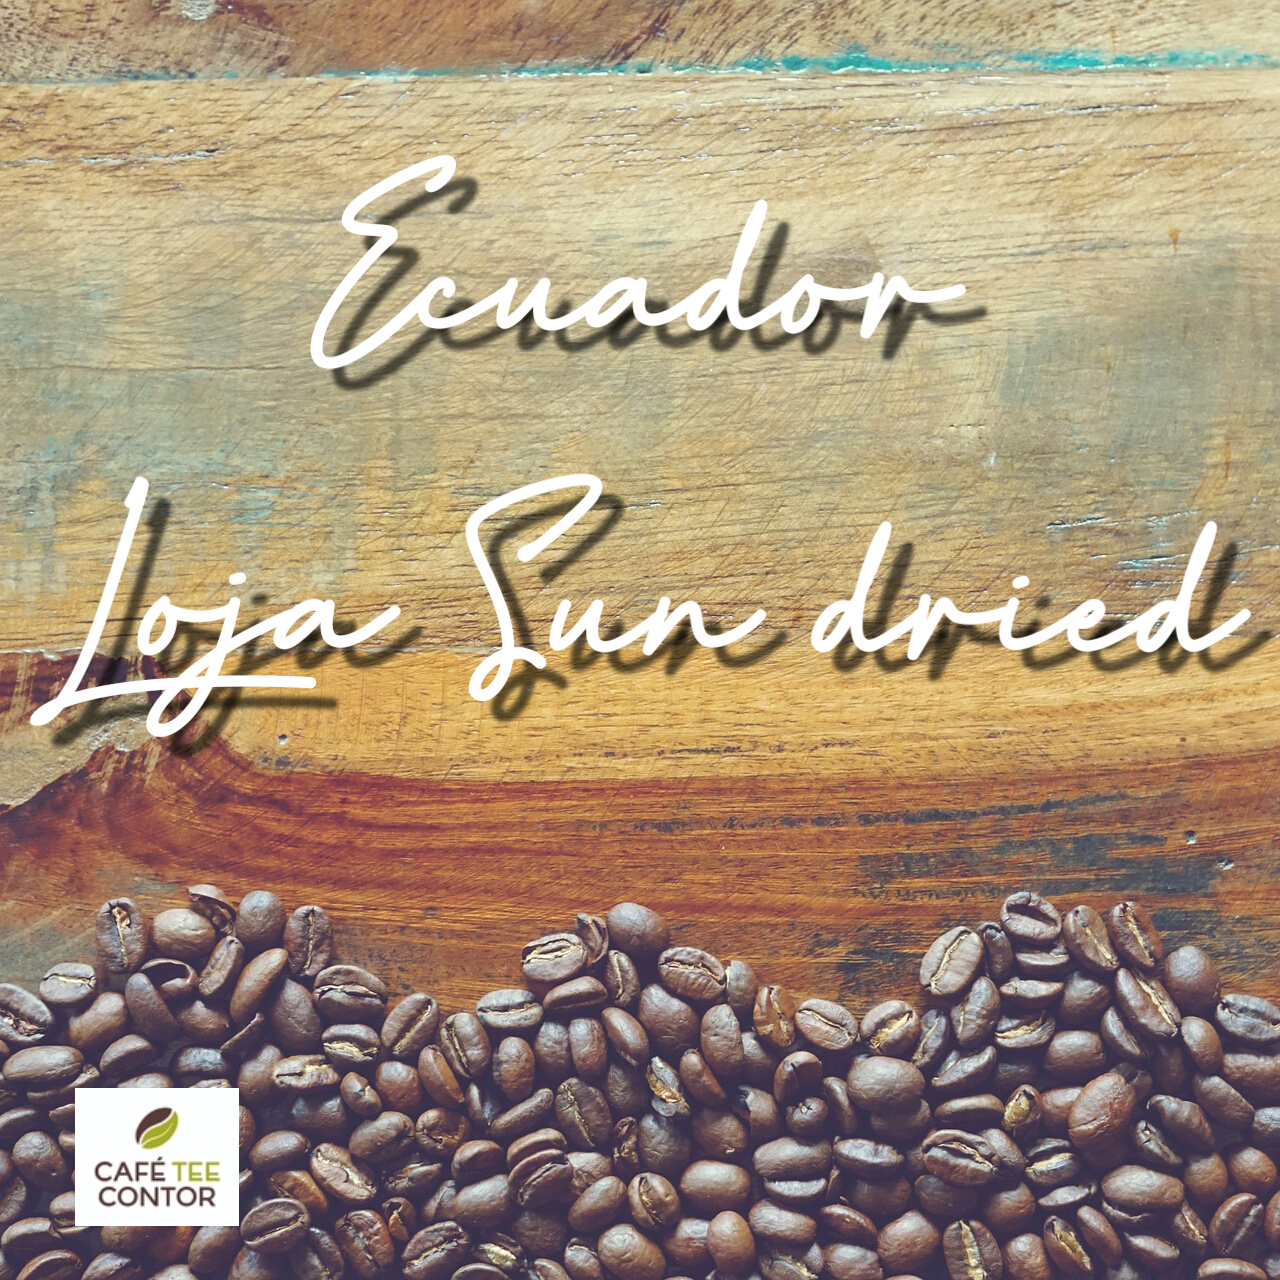 Kaffee Ecuador Loja Sun dried